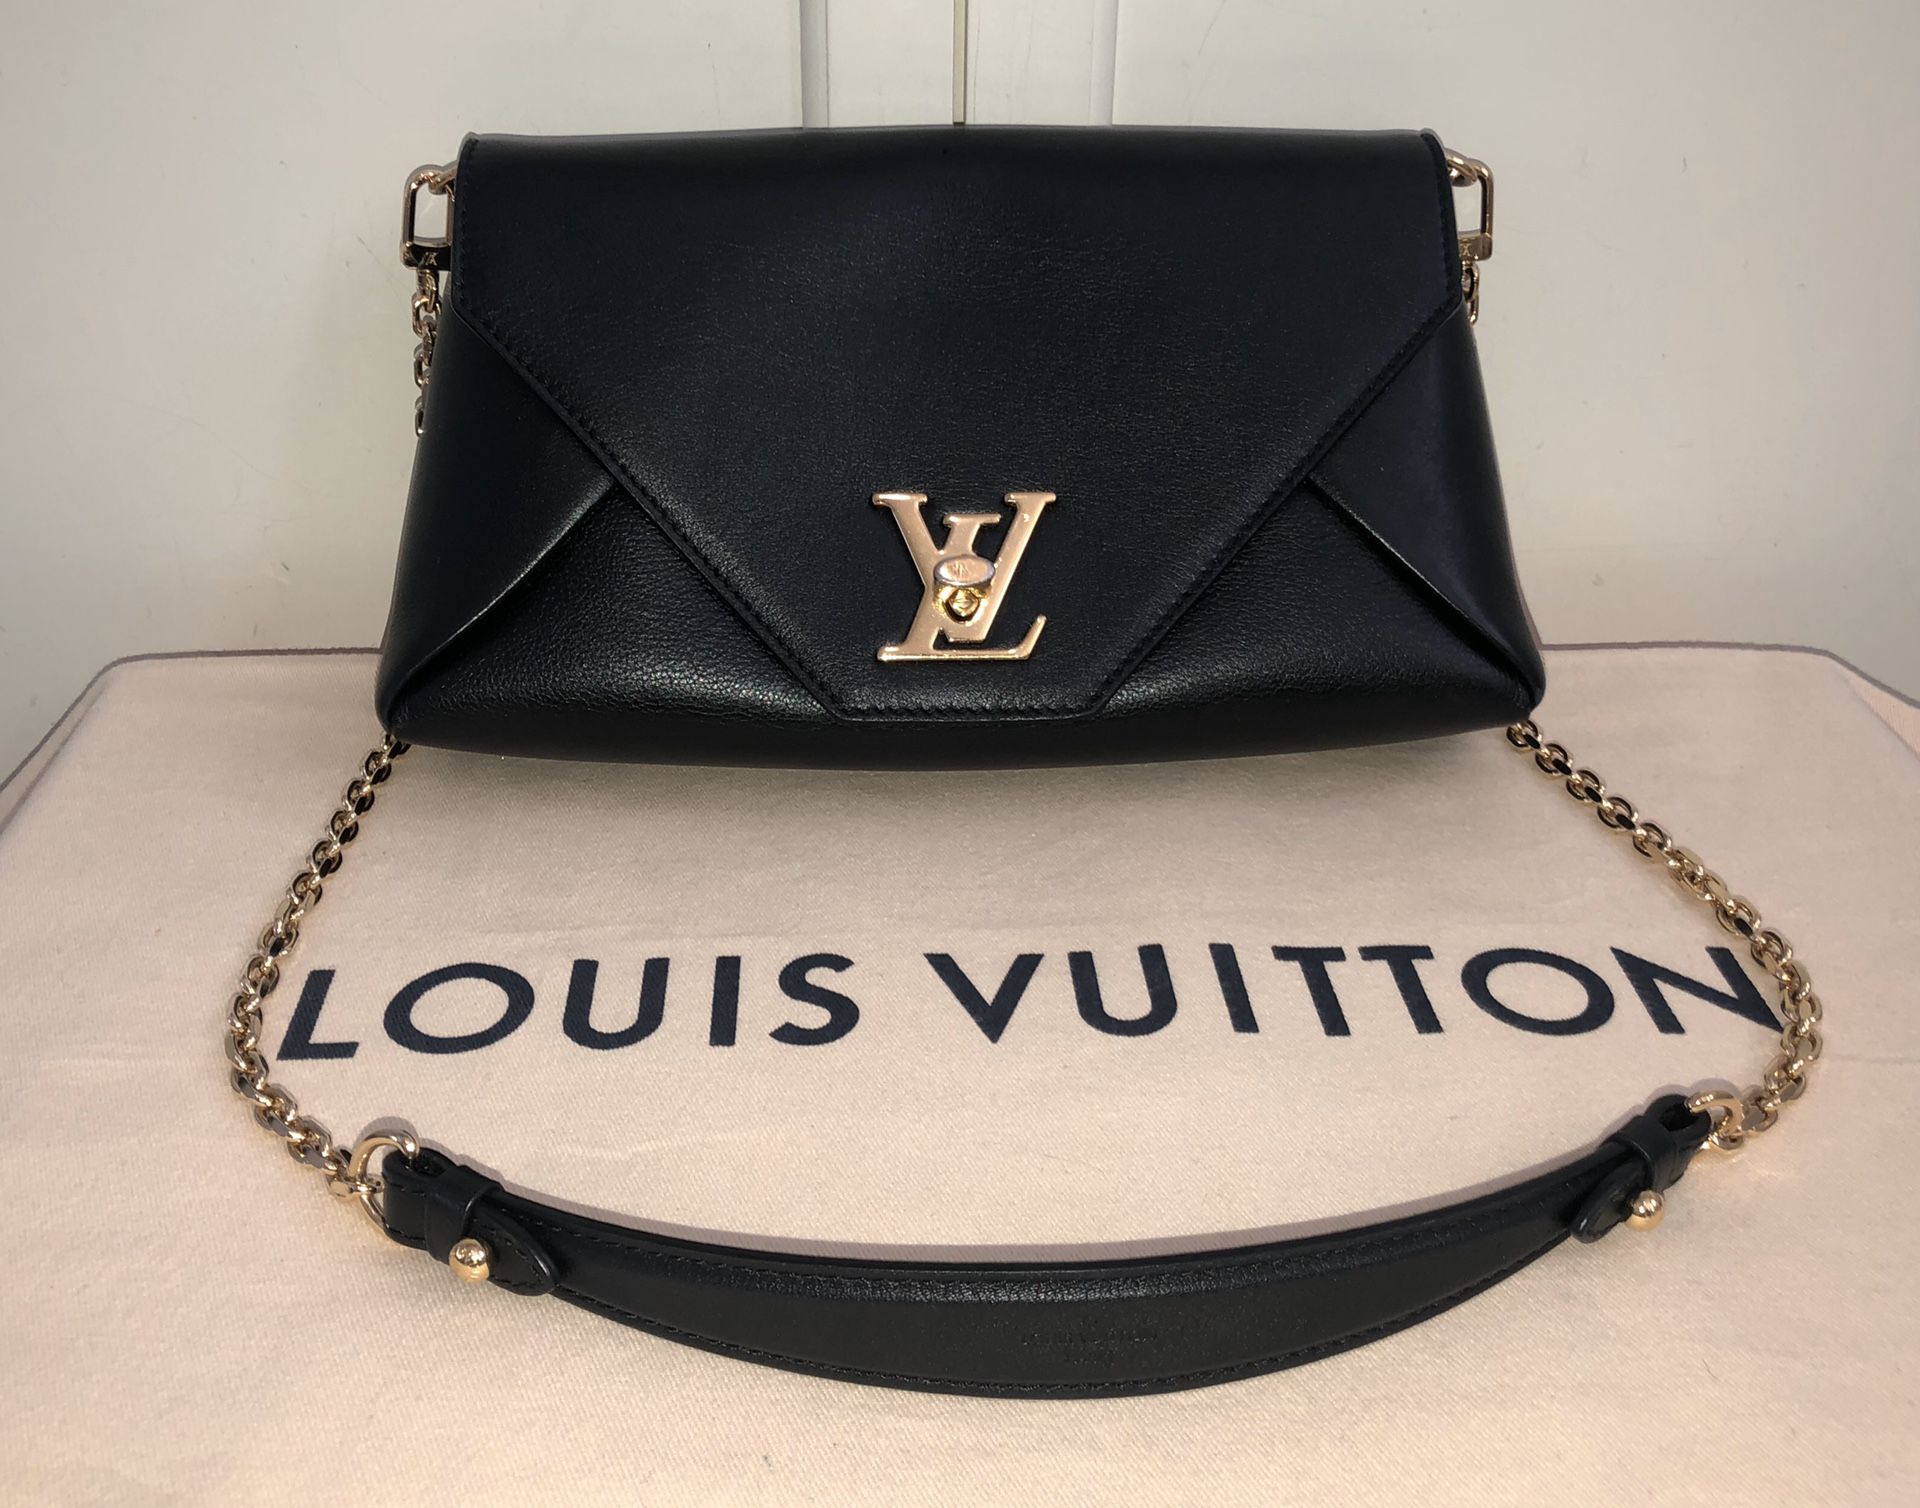 Louis Vuitton Love Note bag